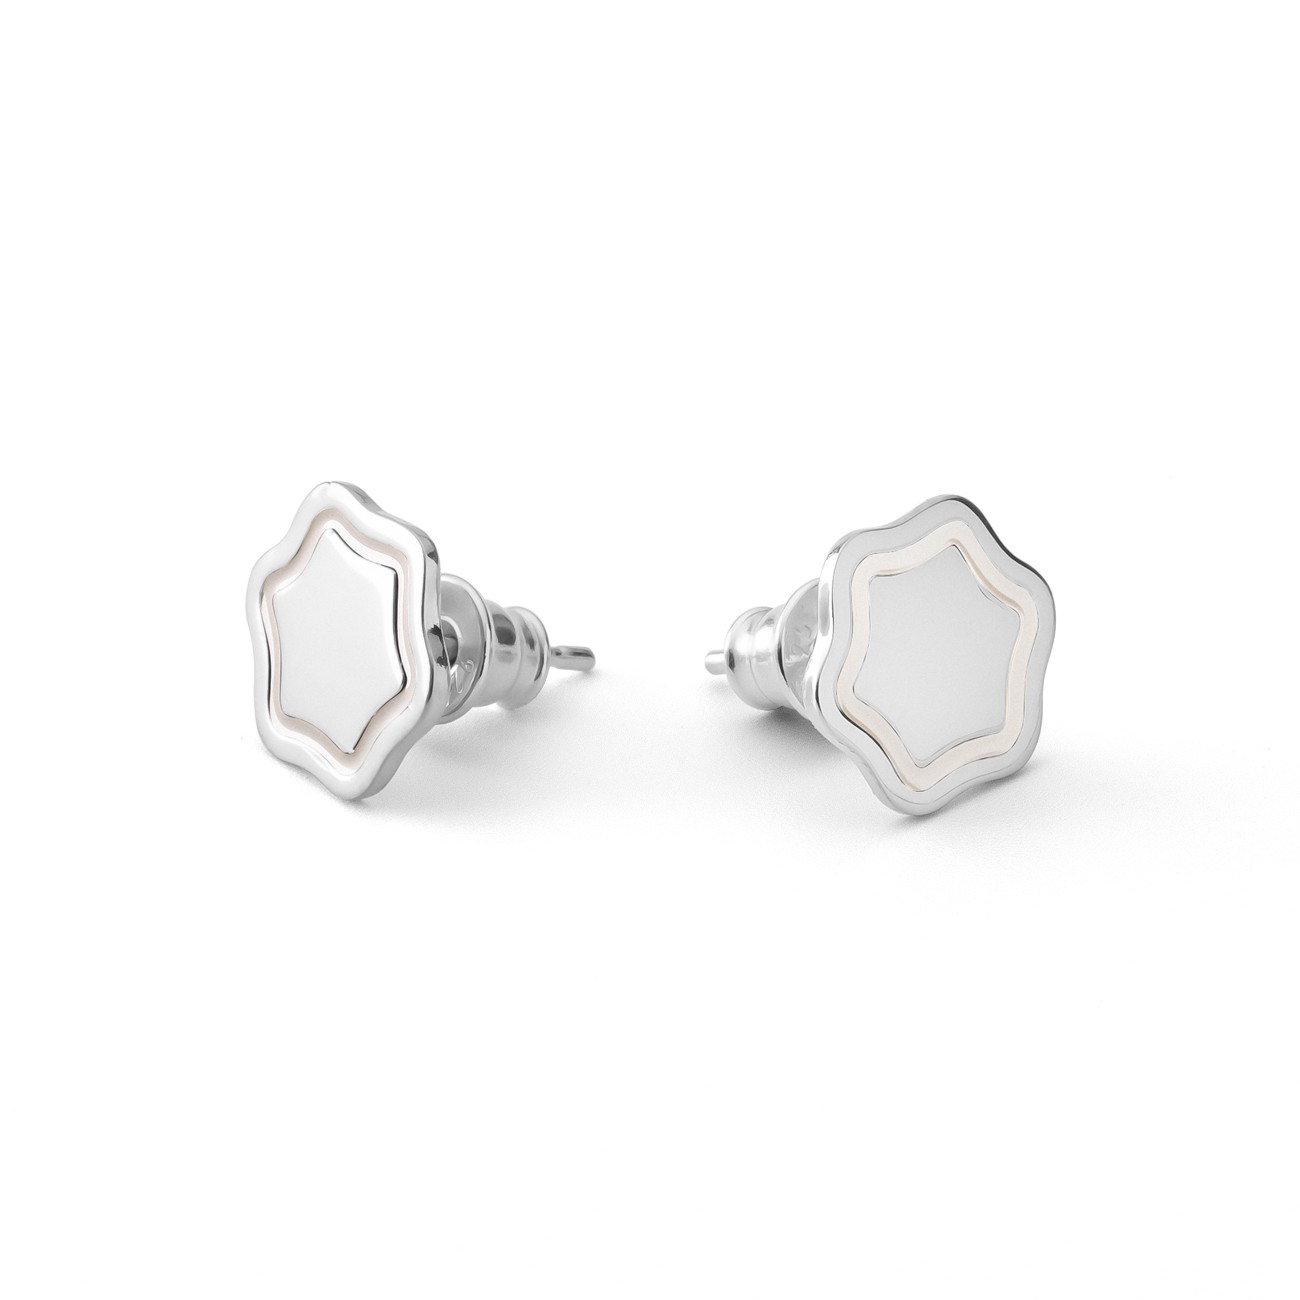 Flower earrings with white resin, sterling silver 925